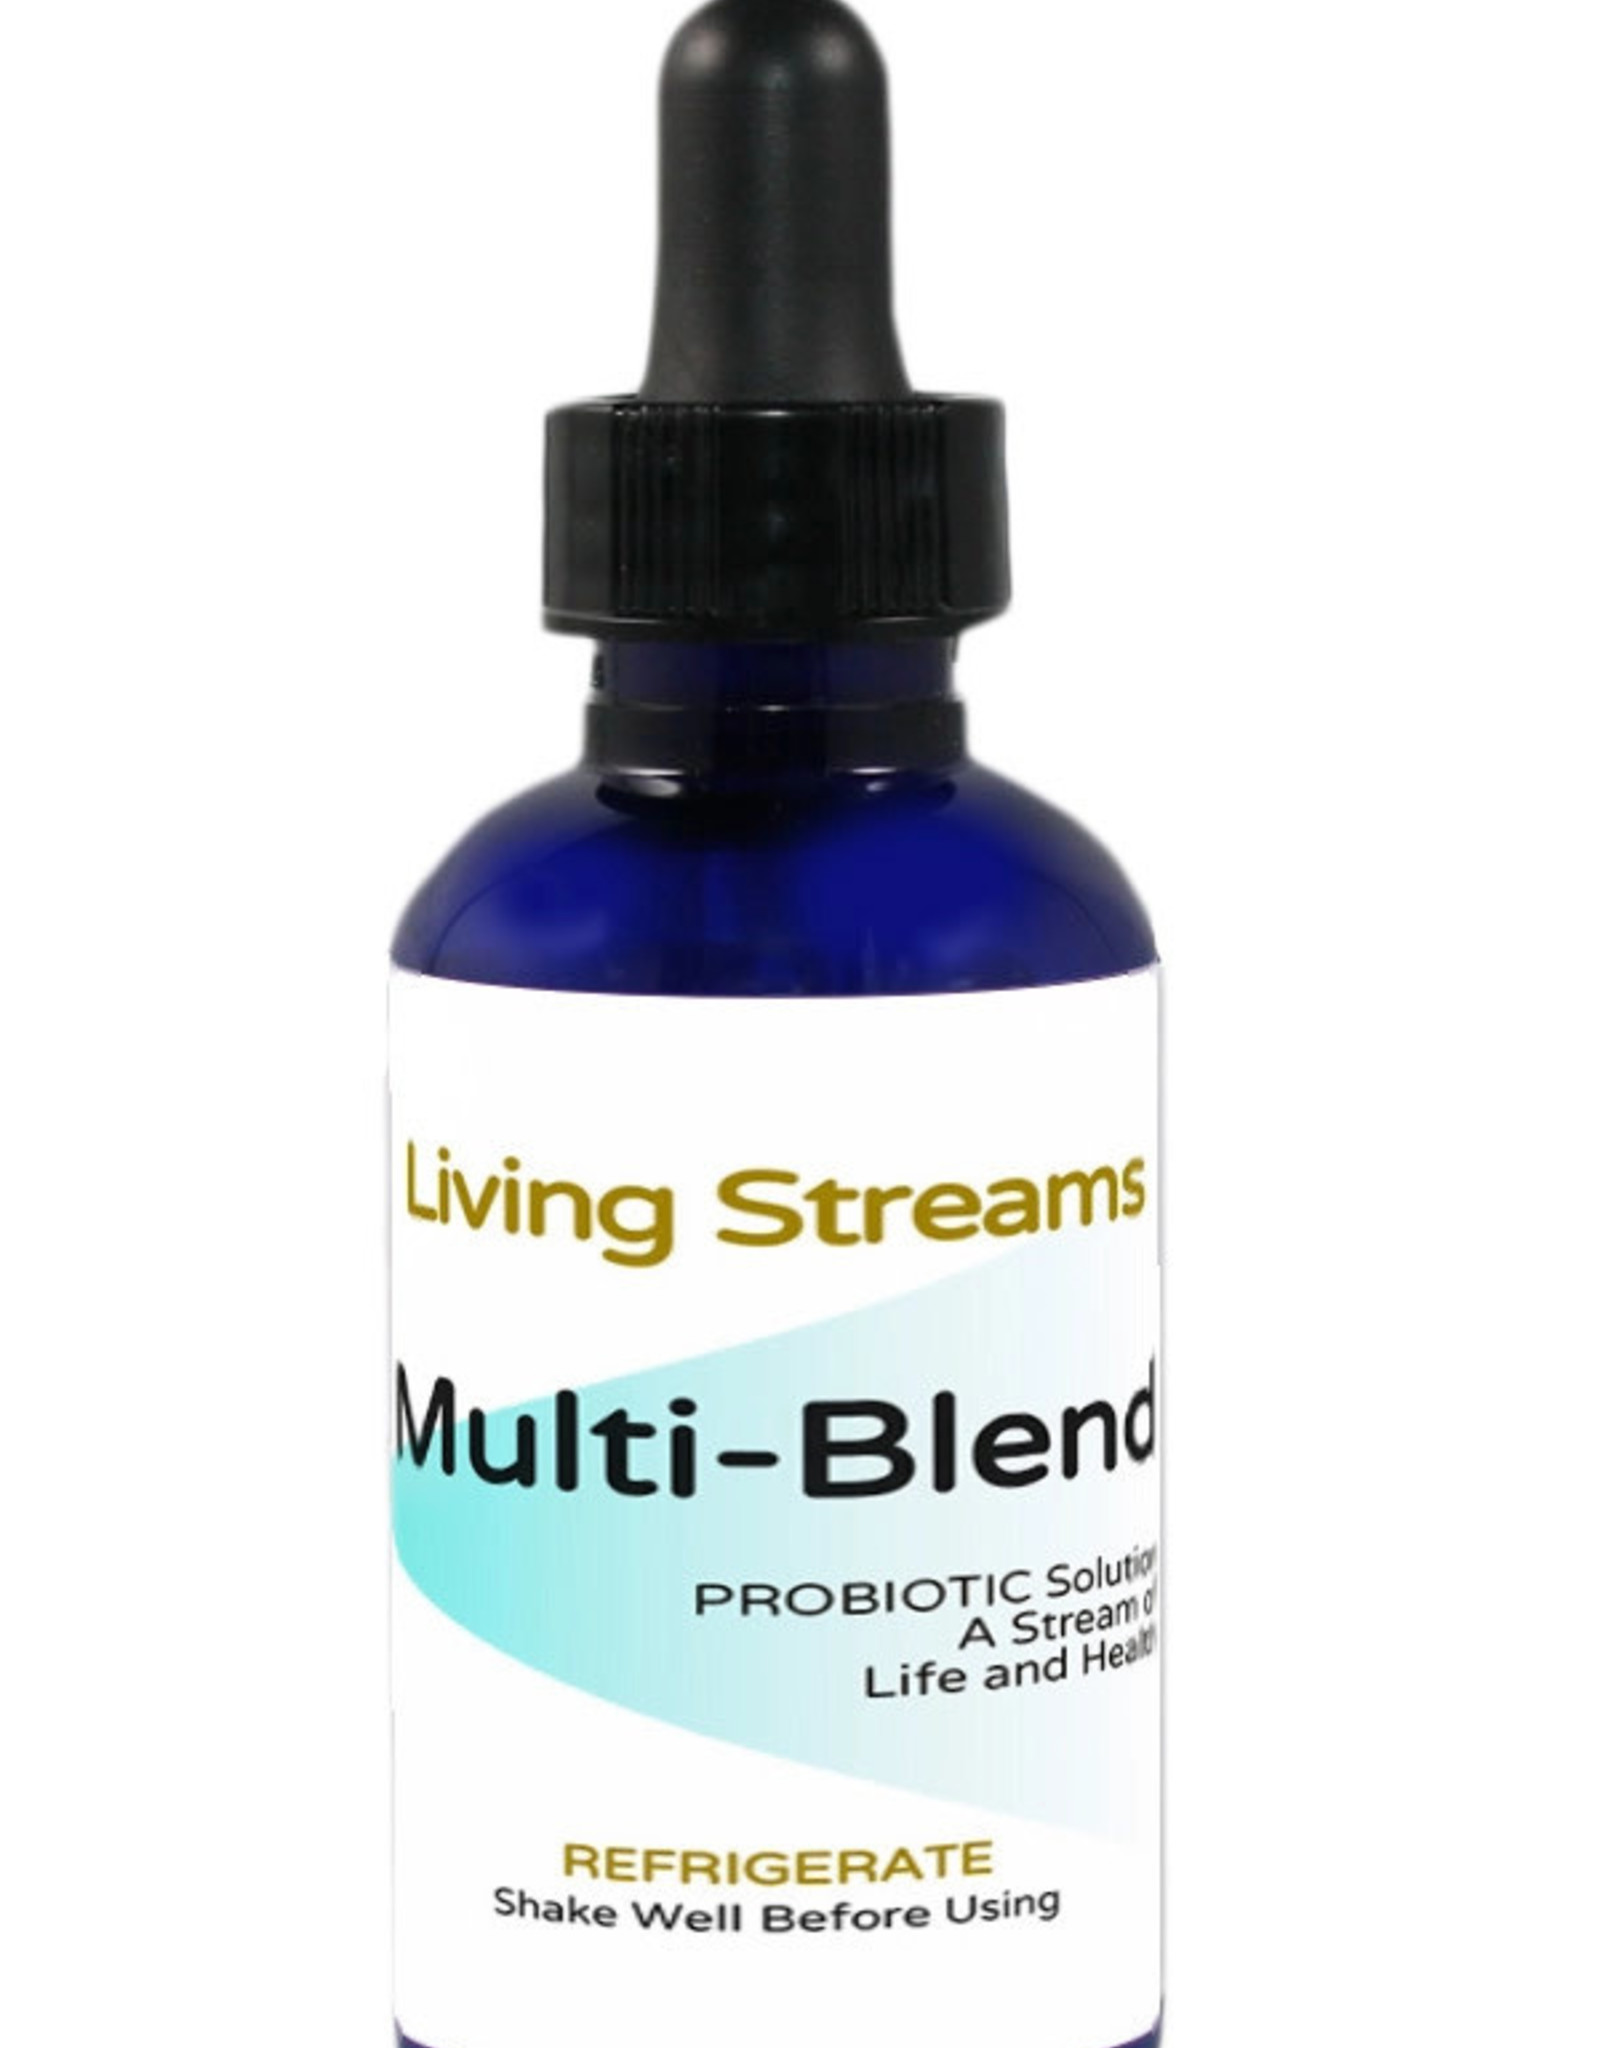 Living Streams Multi-Blend